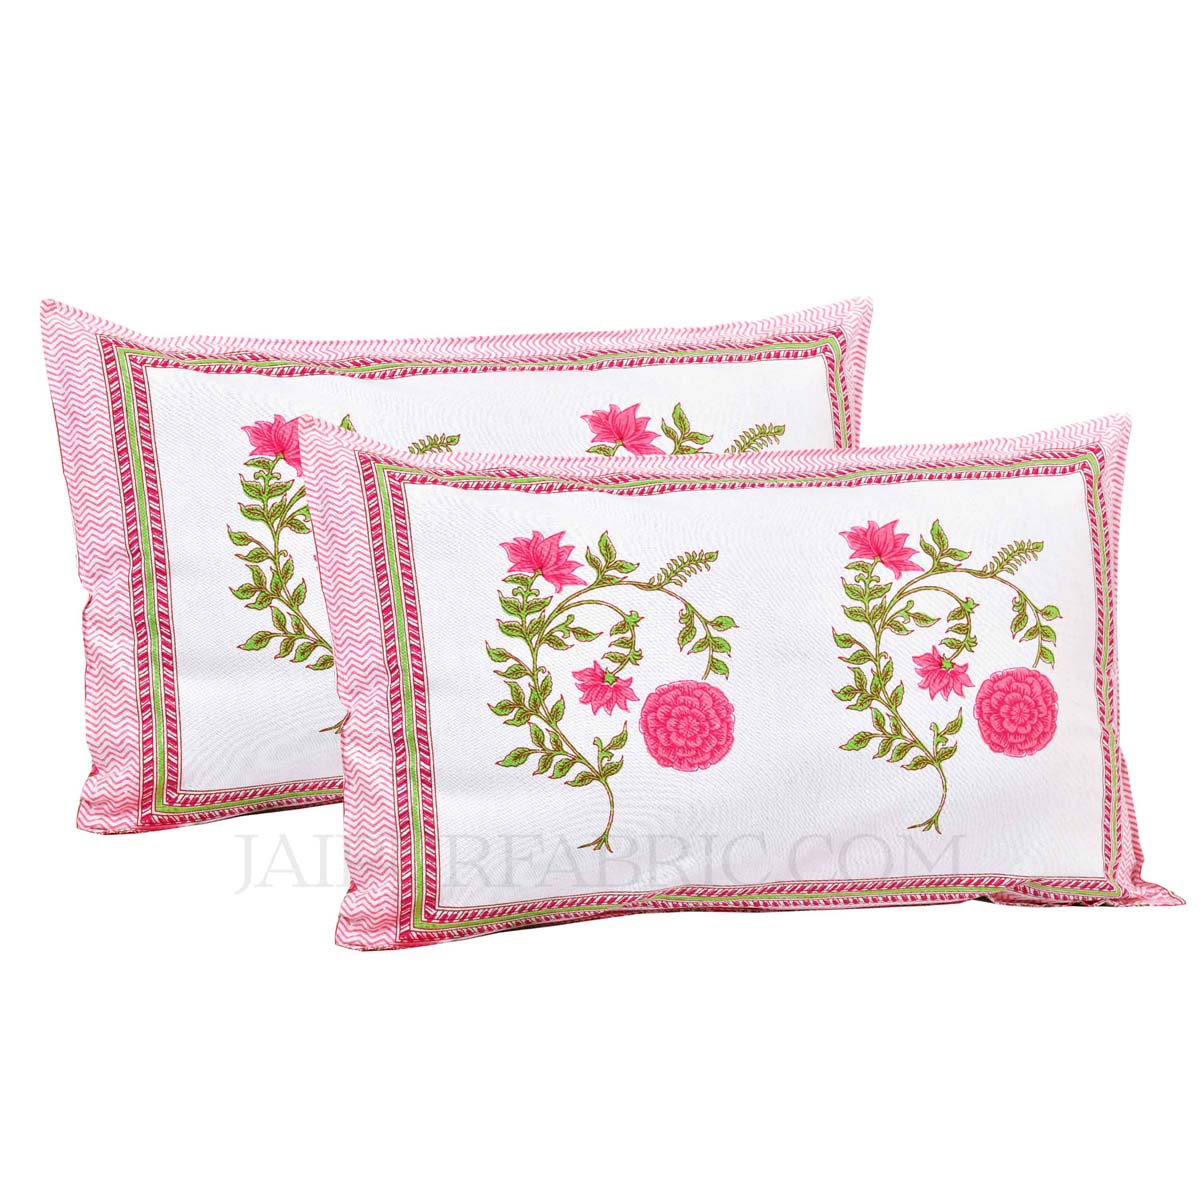 Rani Pink Cherry blossom Super Fine Cotton Block Print King Size Bedsheet